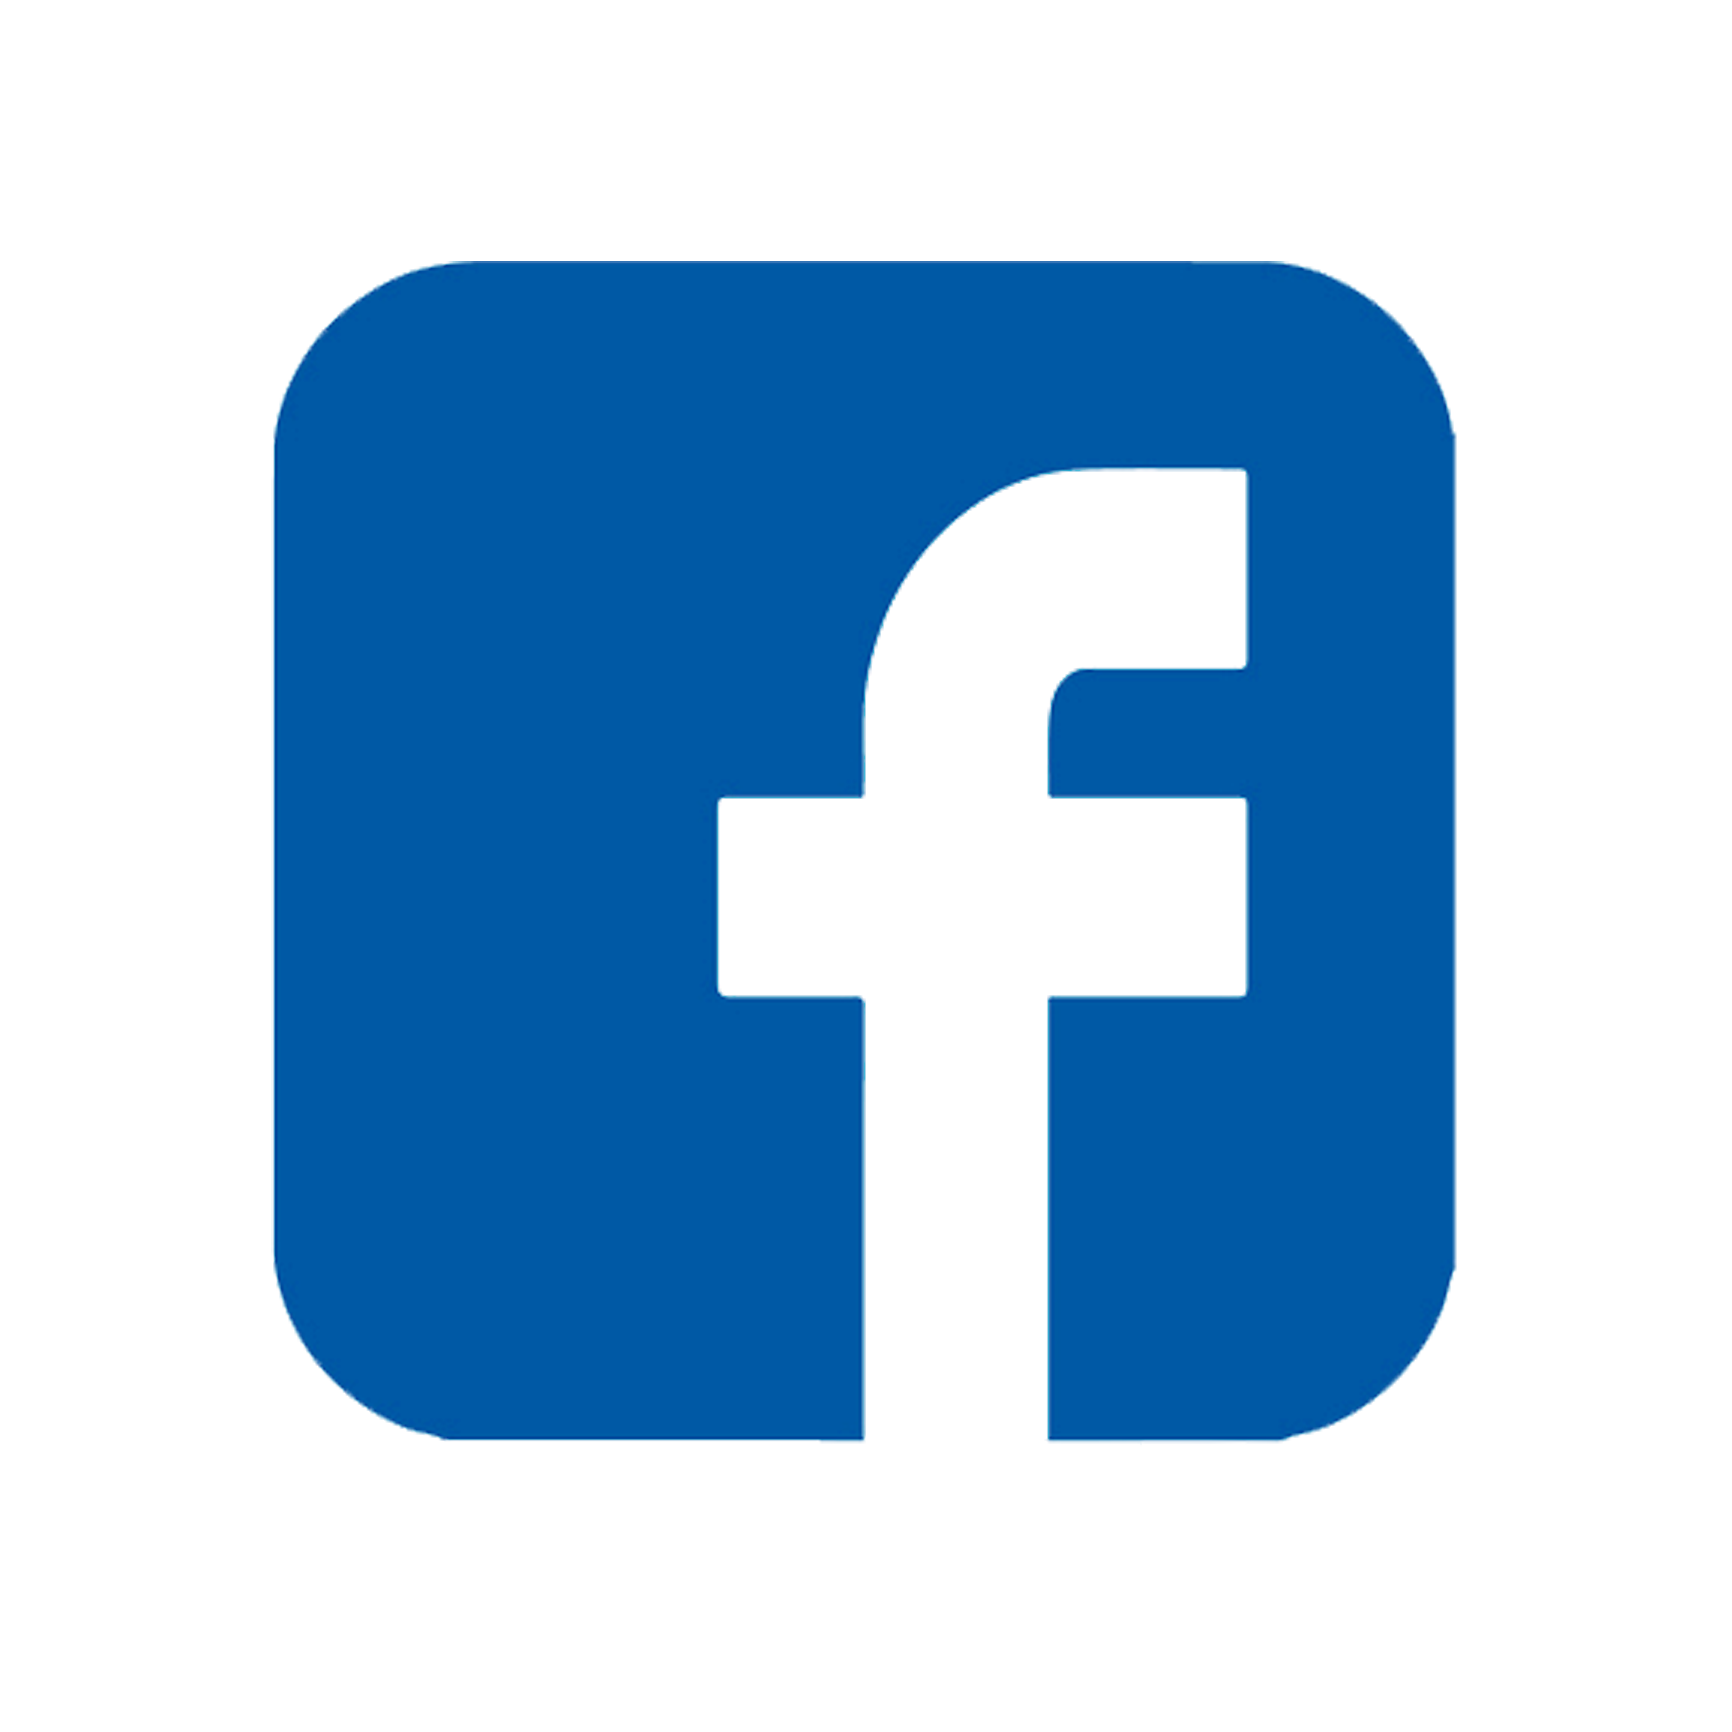 Https ru m w. Пиктограмма Фейсбук. Ярлык Фейсбук. Значок Фасебук. Значок Фейсбук для сайта.